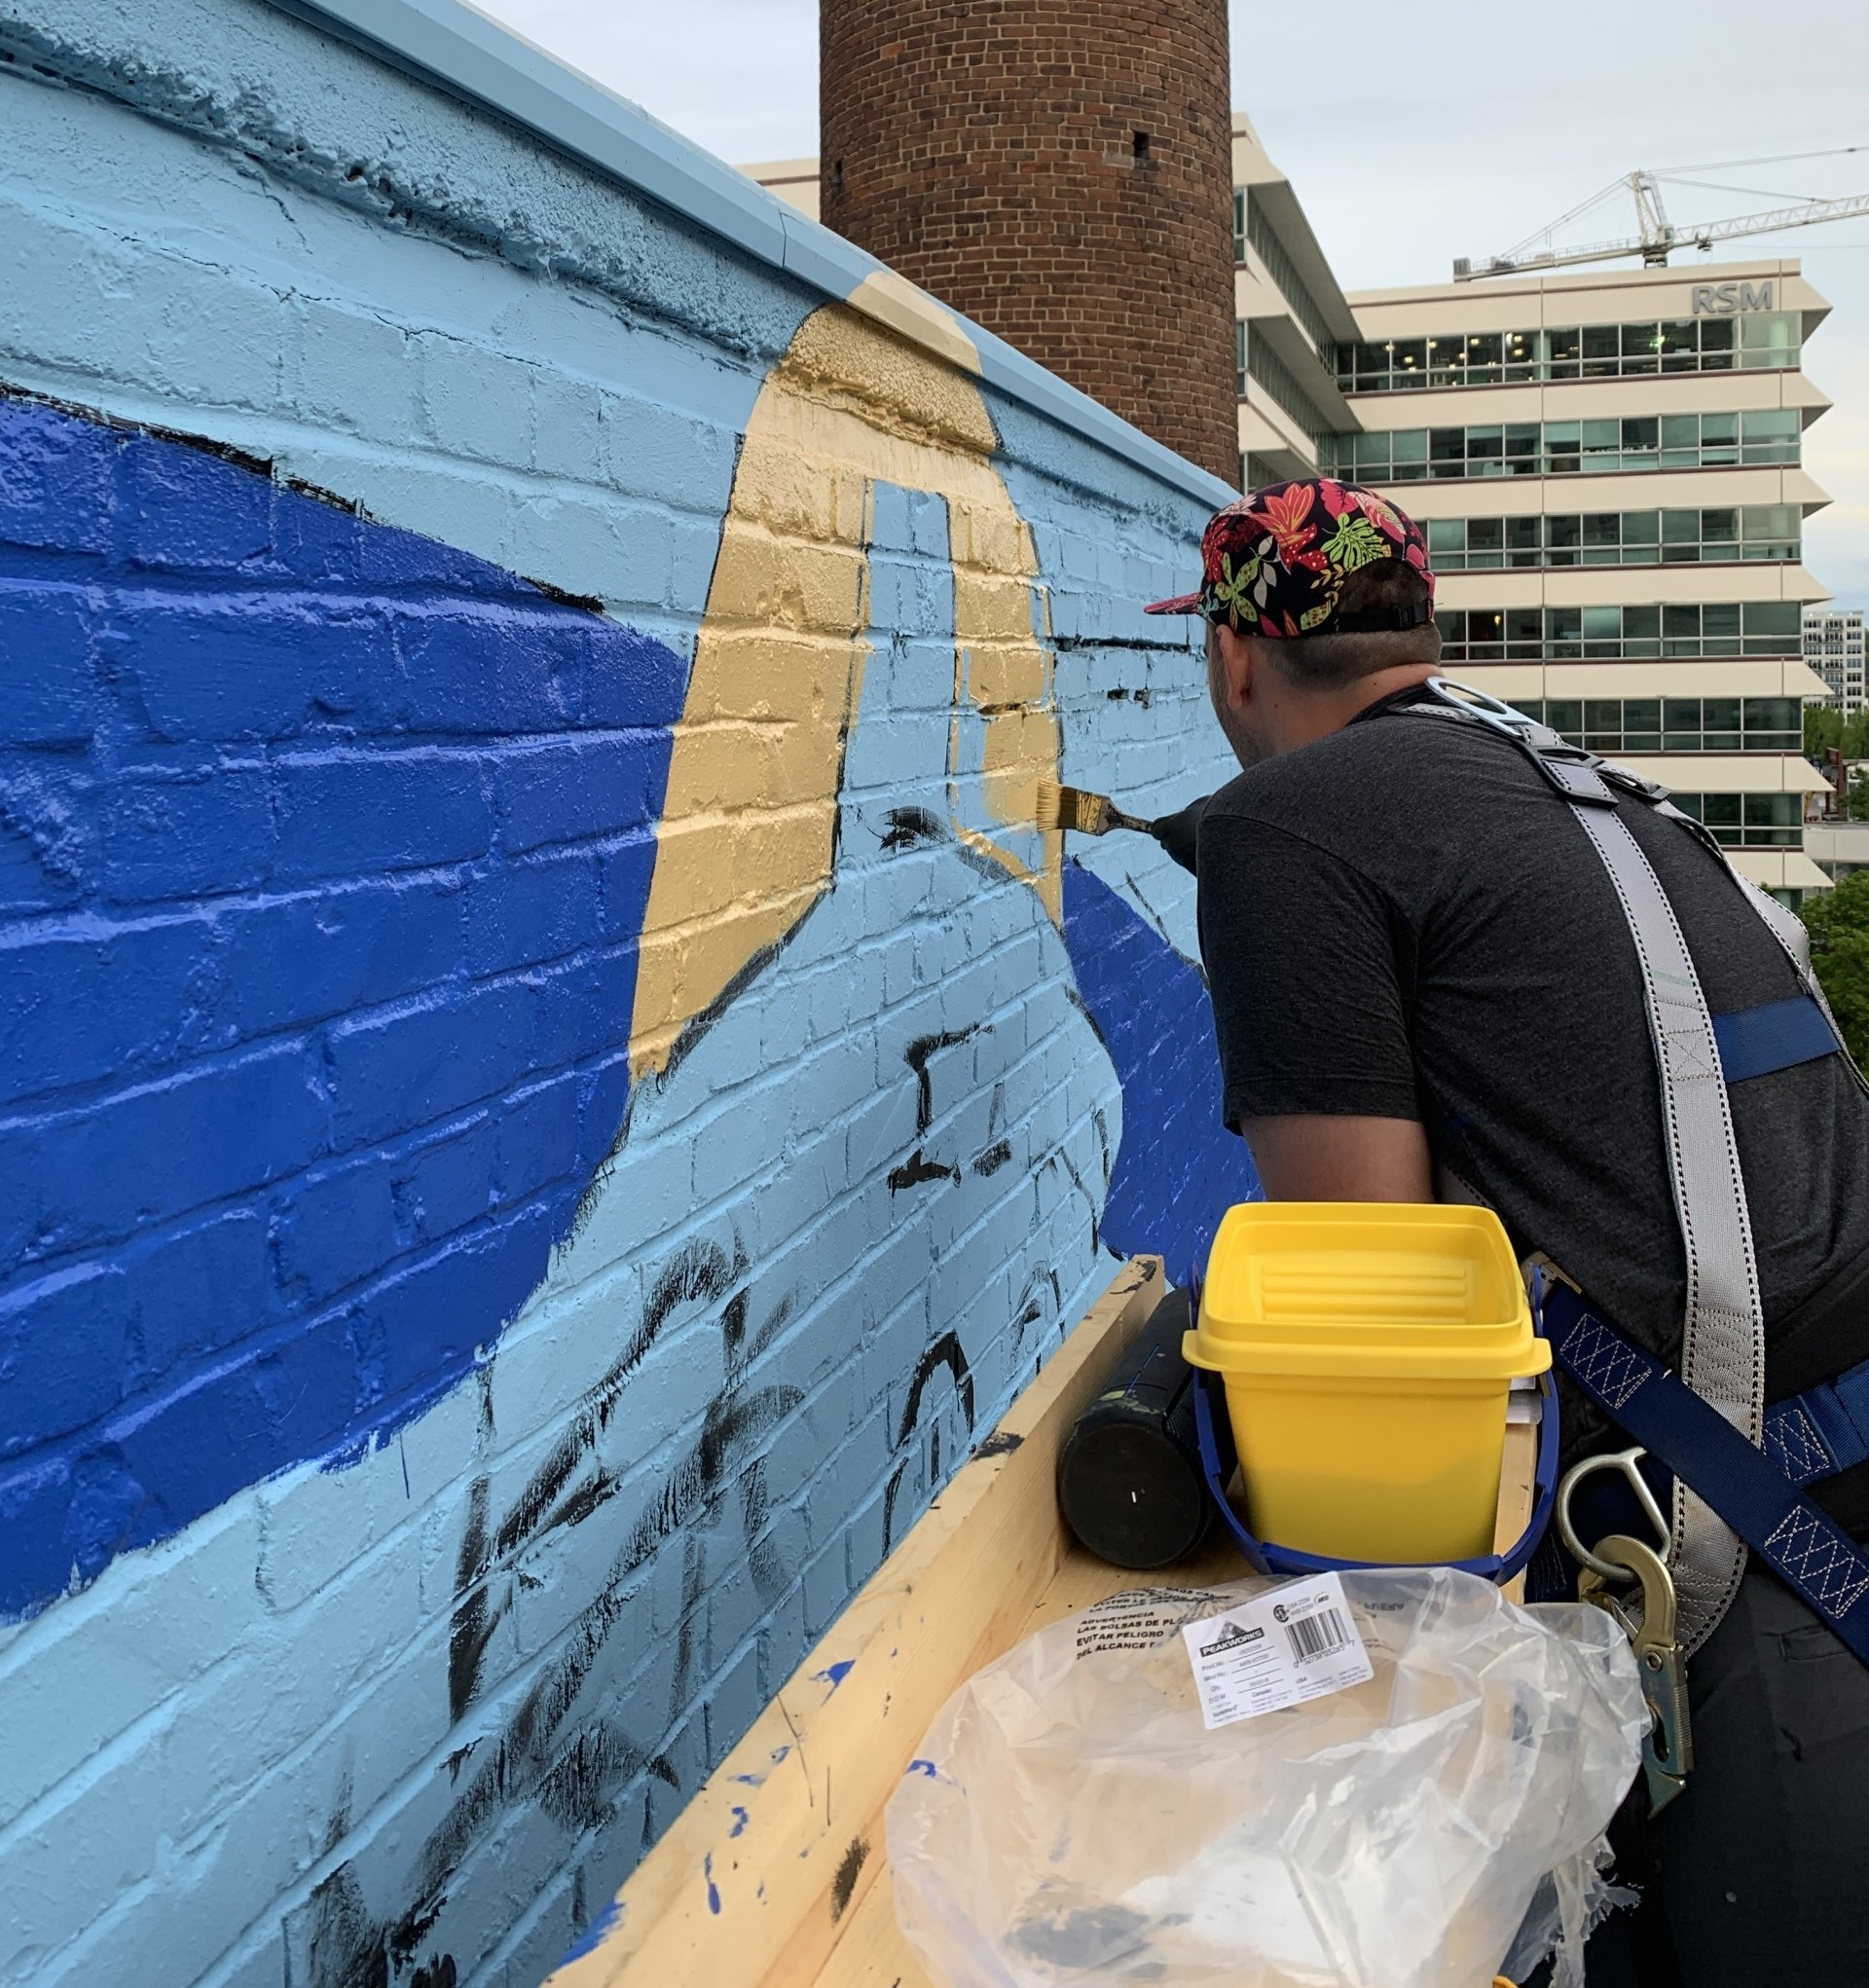 Artist Ben Schuh painting the exterior wall